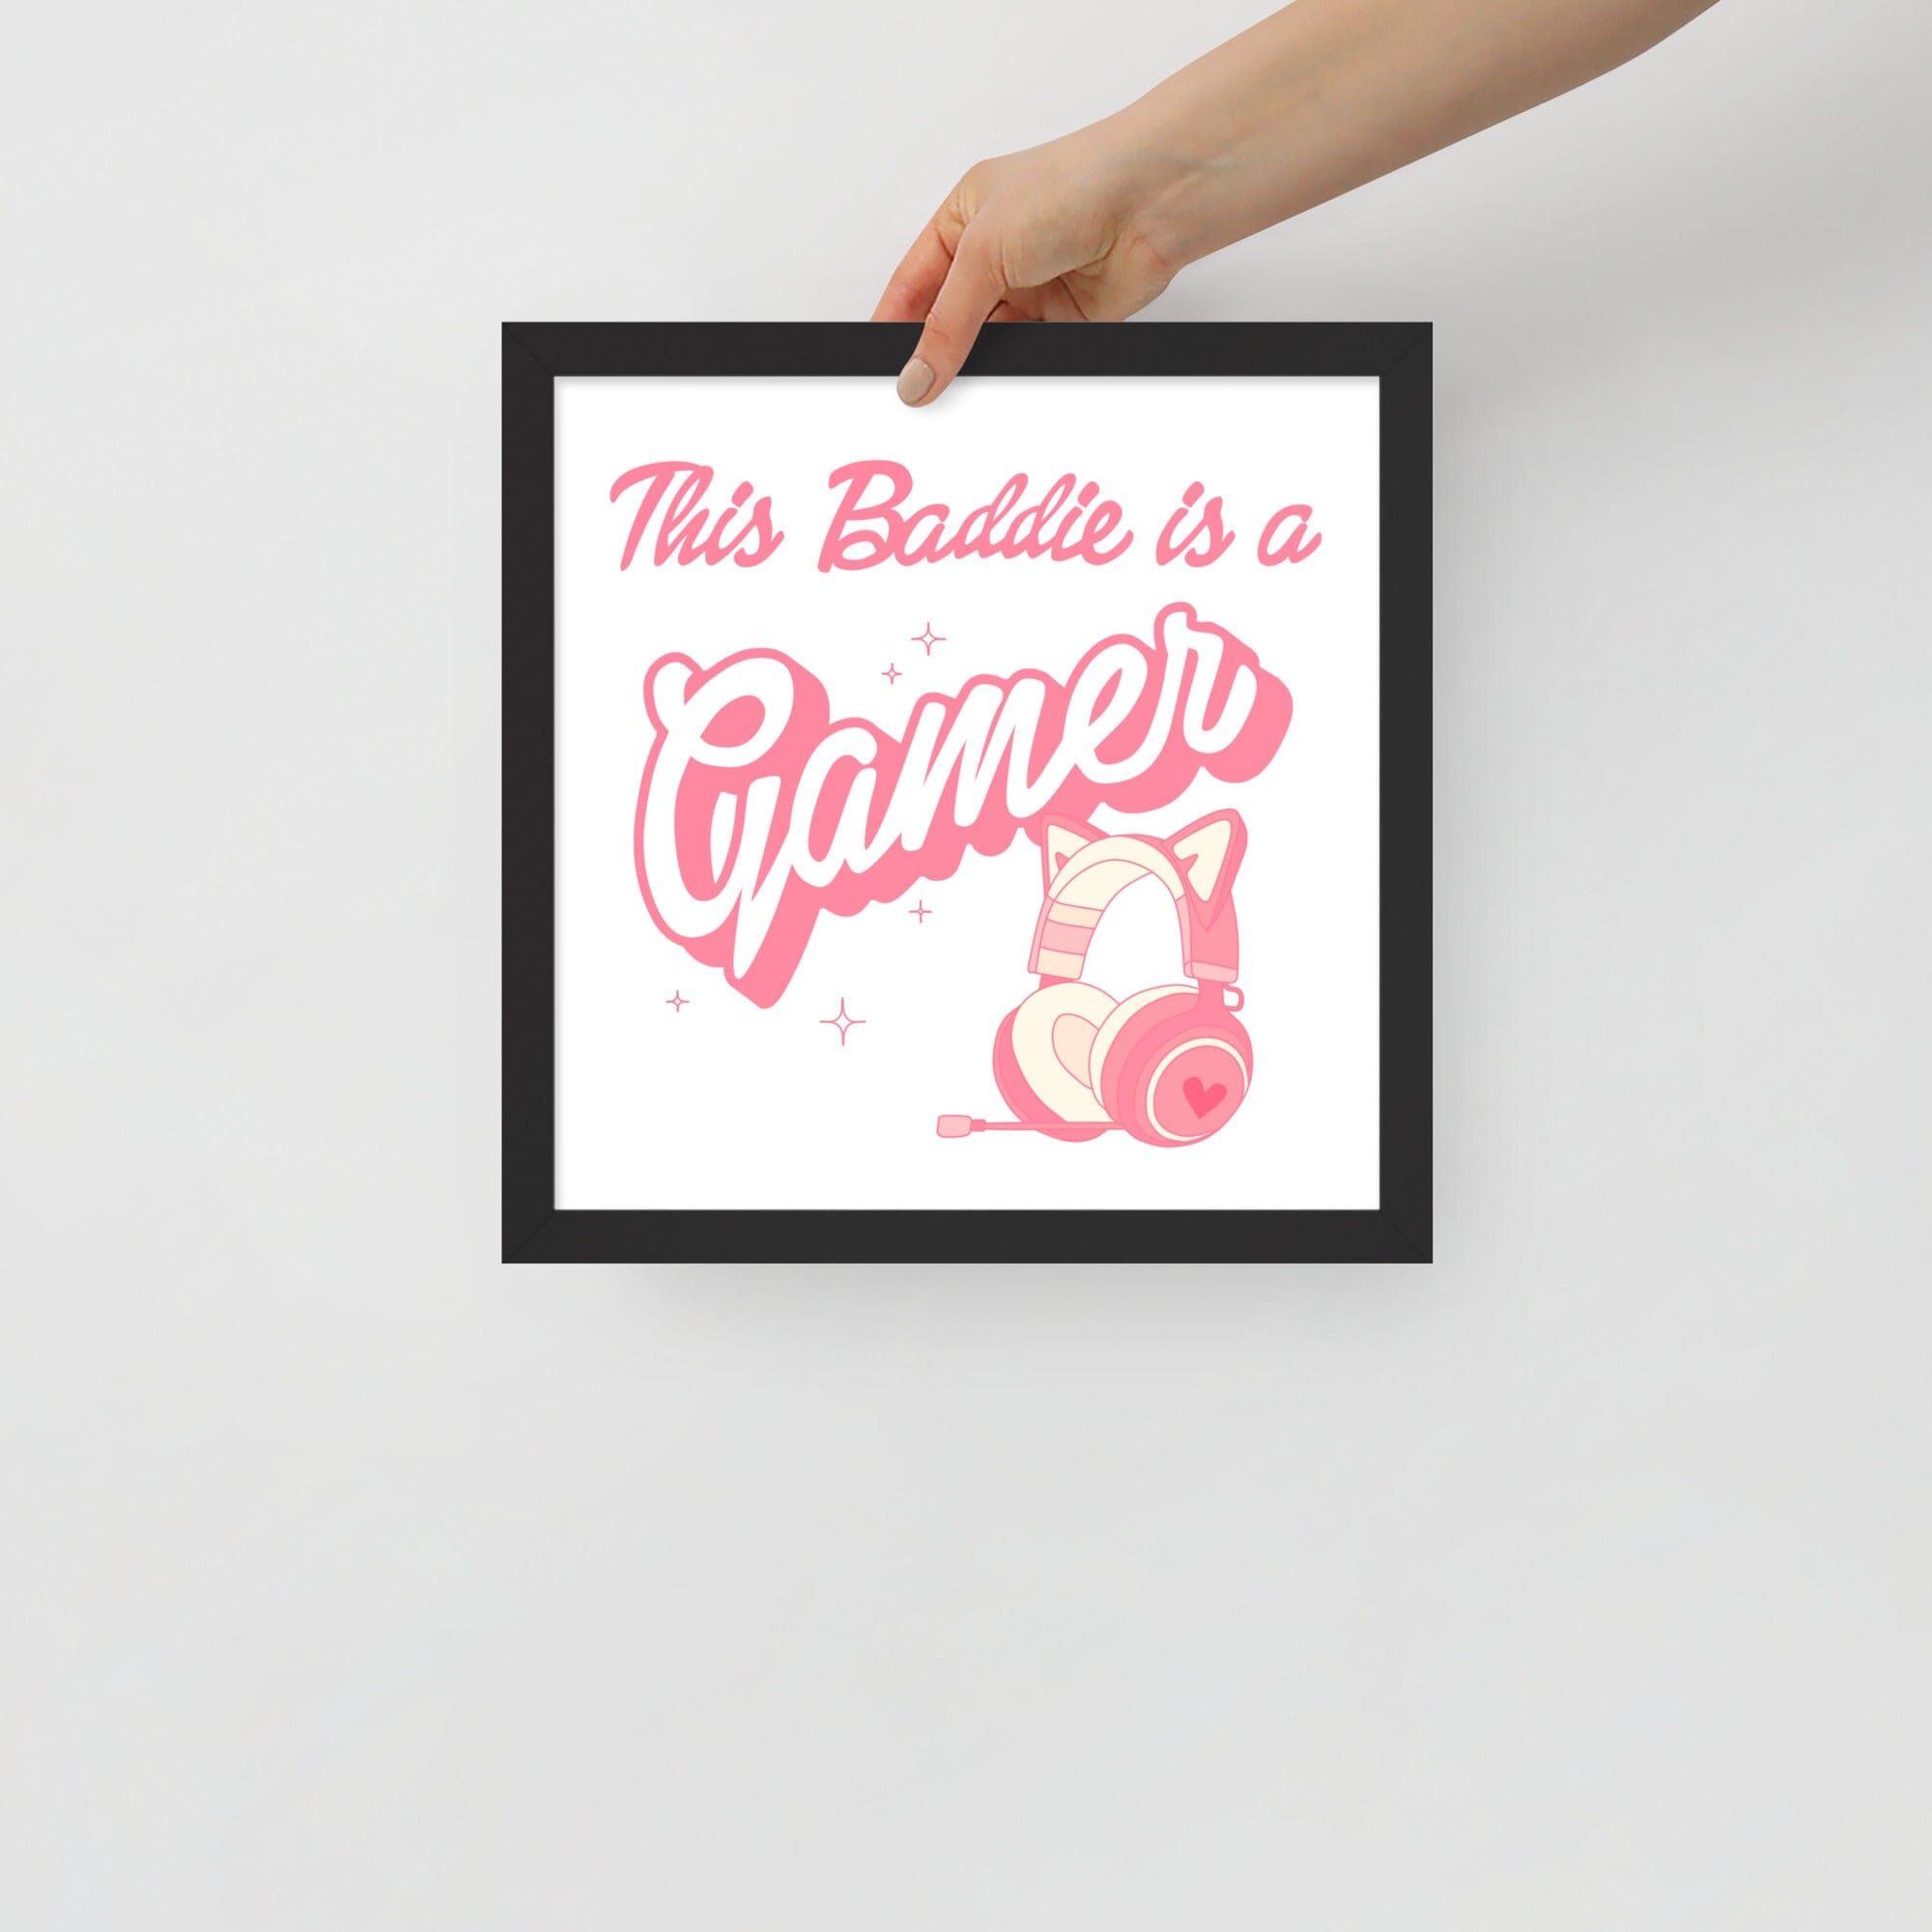 This Baddie is a Gamer (Girly Girl) | Framed poster | Feminist Gamer Threads & Thistles Inventory Black 12″×12″ 